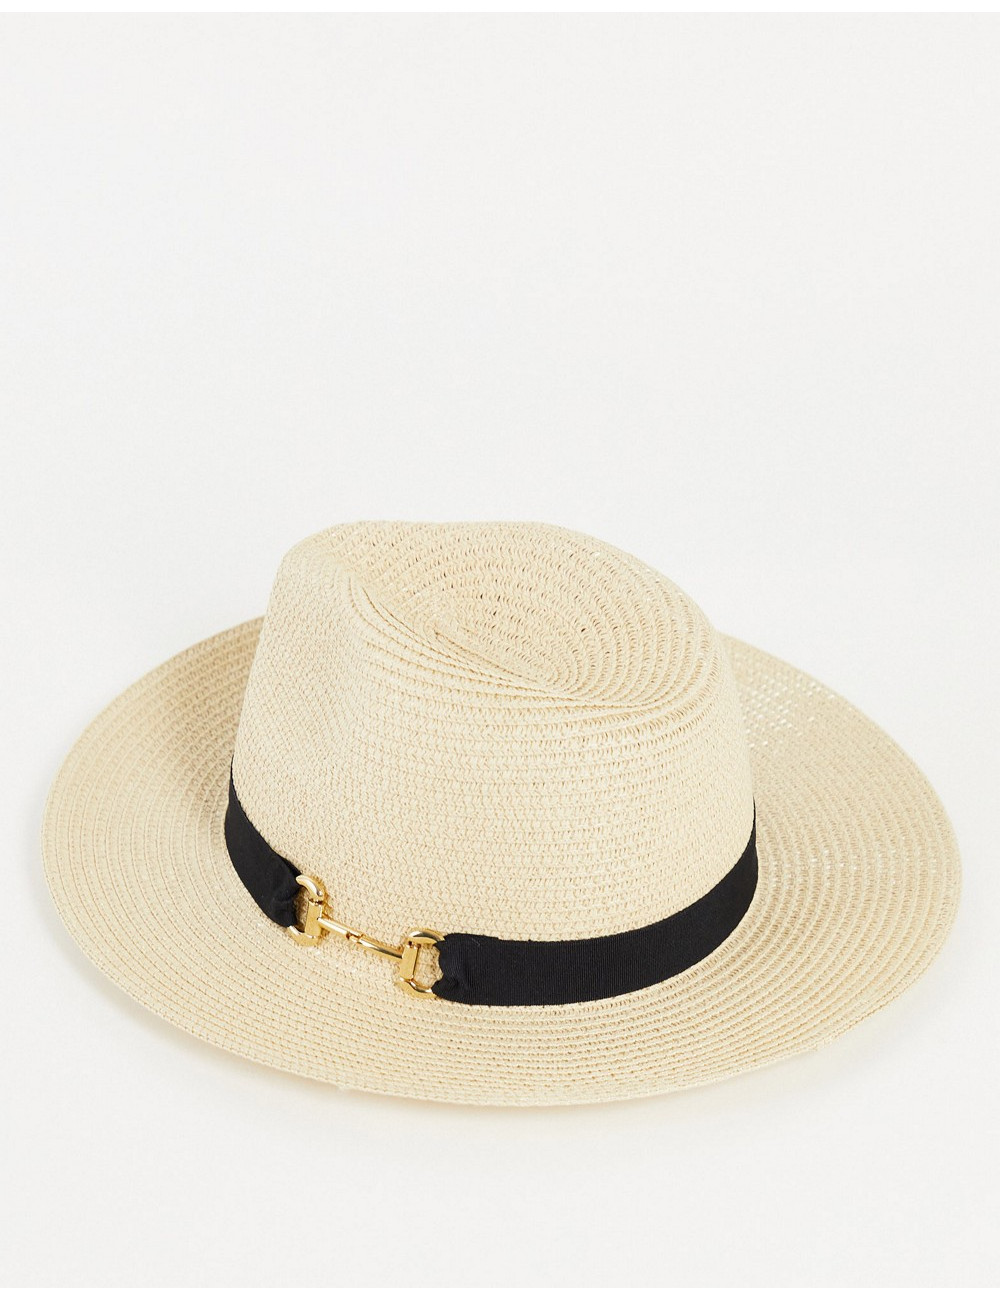 ALDO Masyn straw hat with...